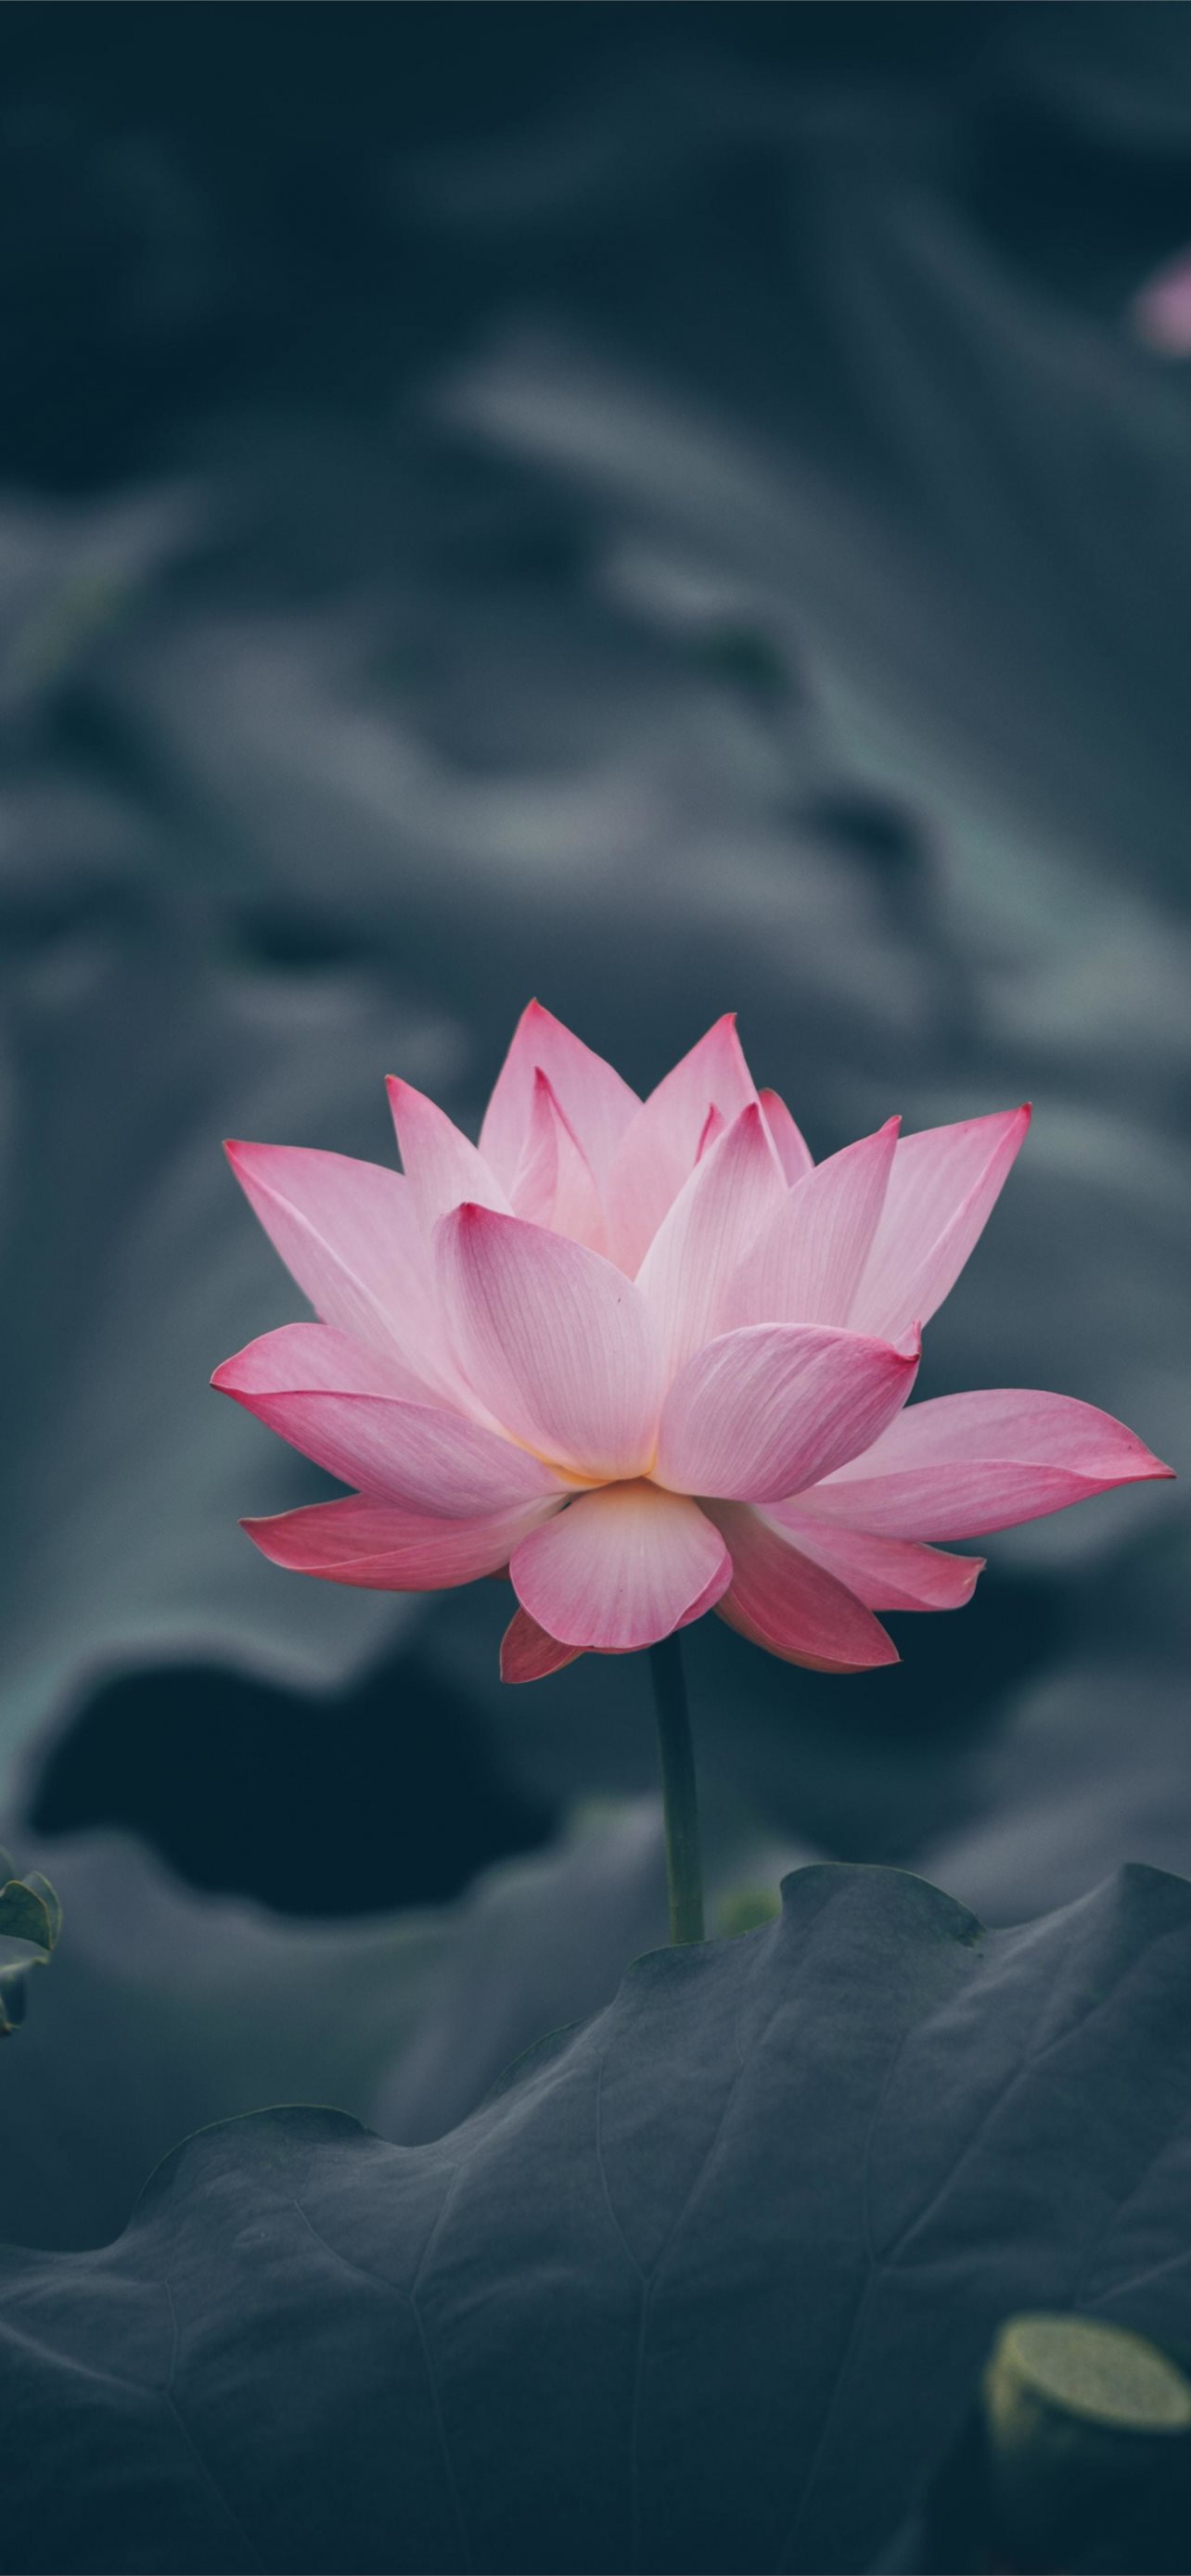 lotus flower iPhone Wallpapers Free Download